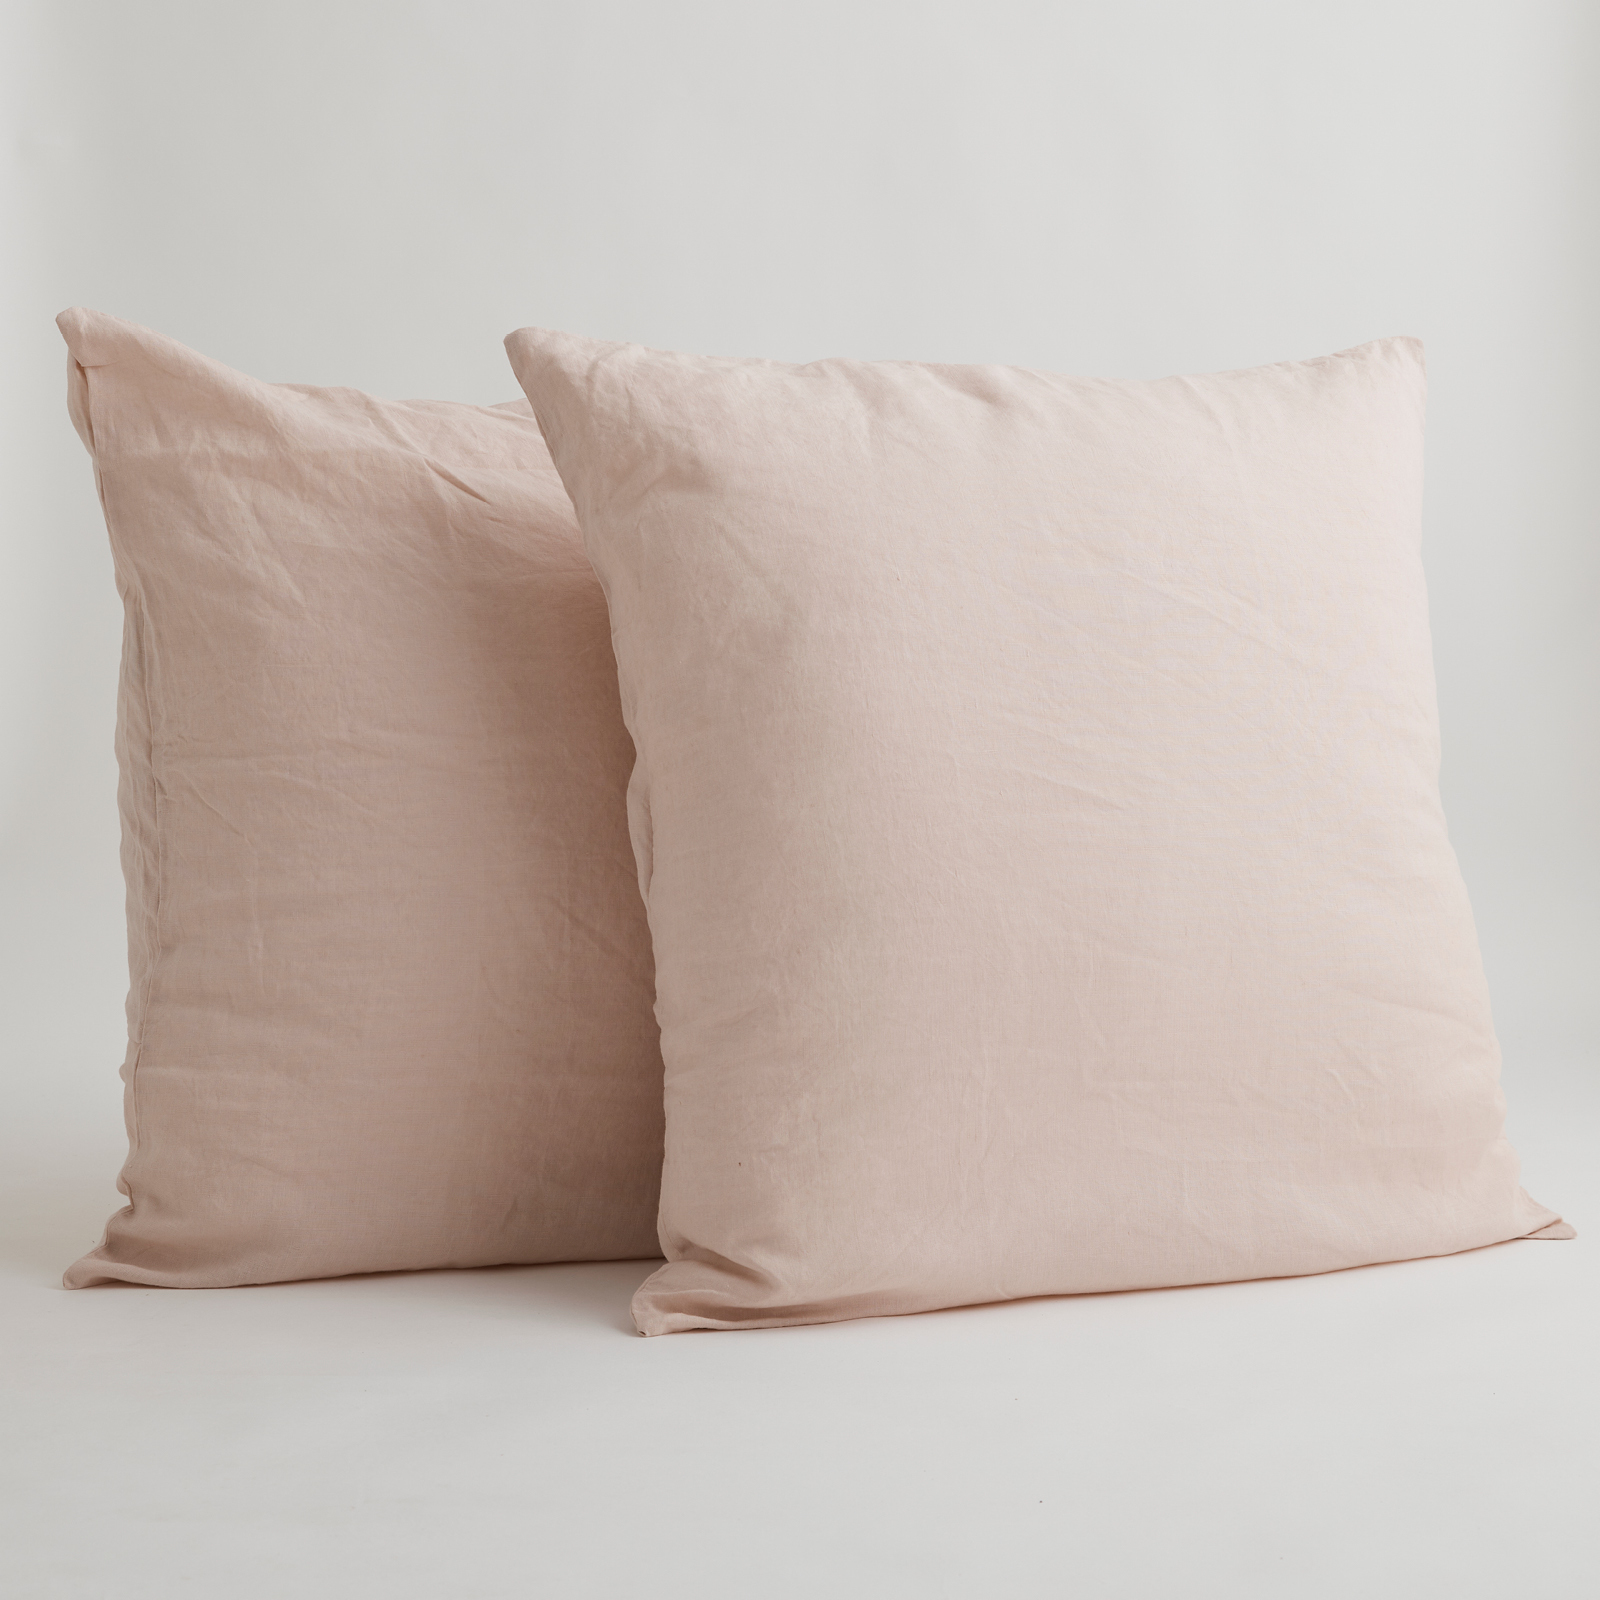 100% Pure Linen European Pillowcase Set in Blush (2)